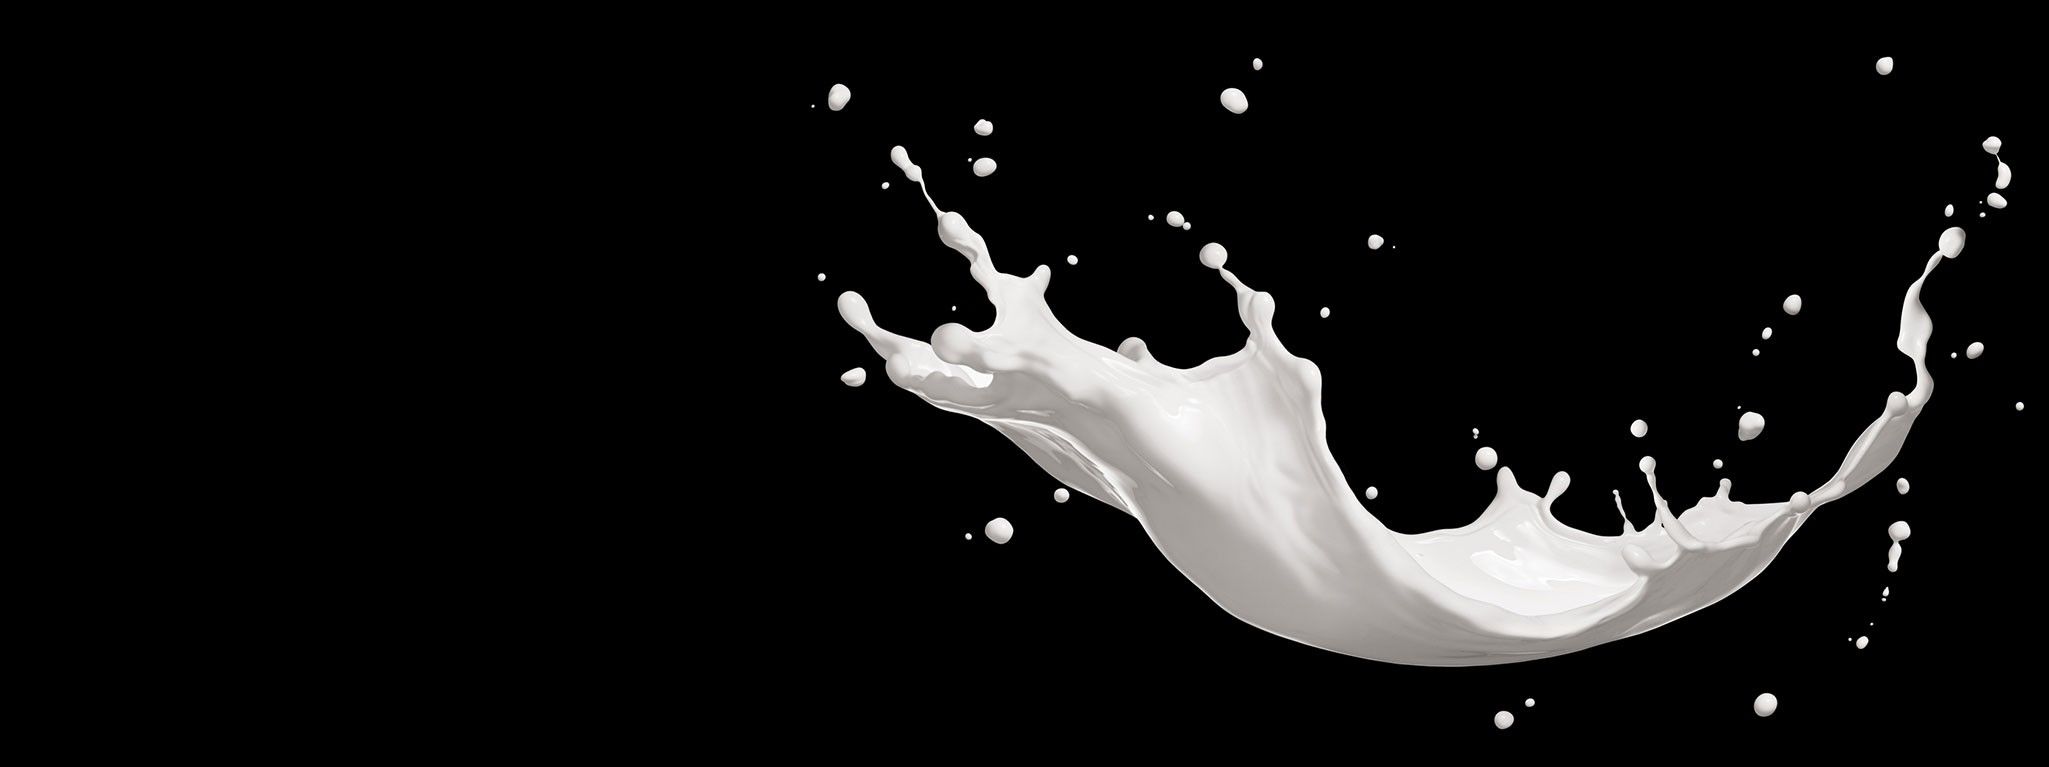 Featured image for Got Milk? Addressing Fragmentation in the TV Landscape